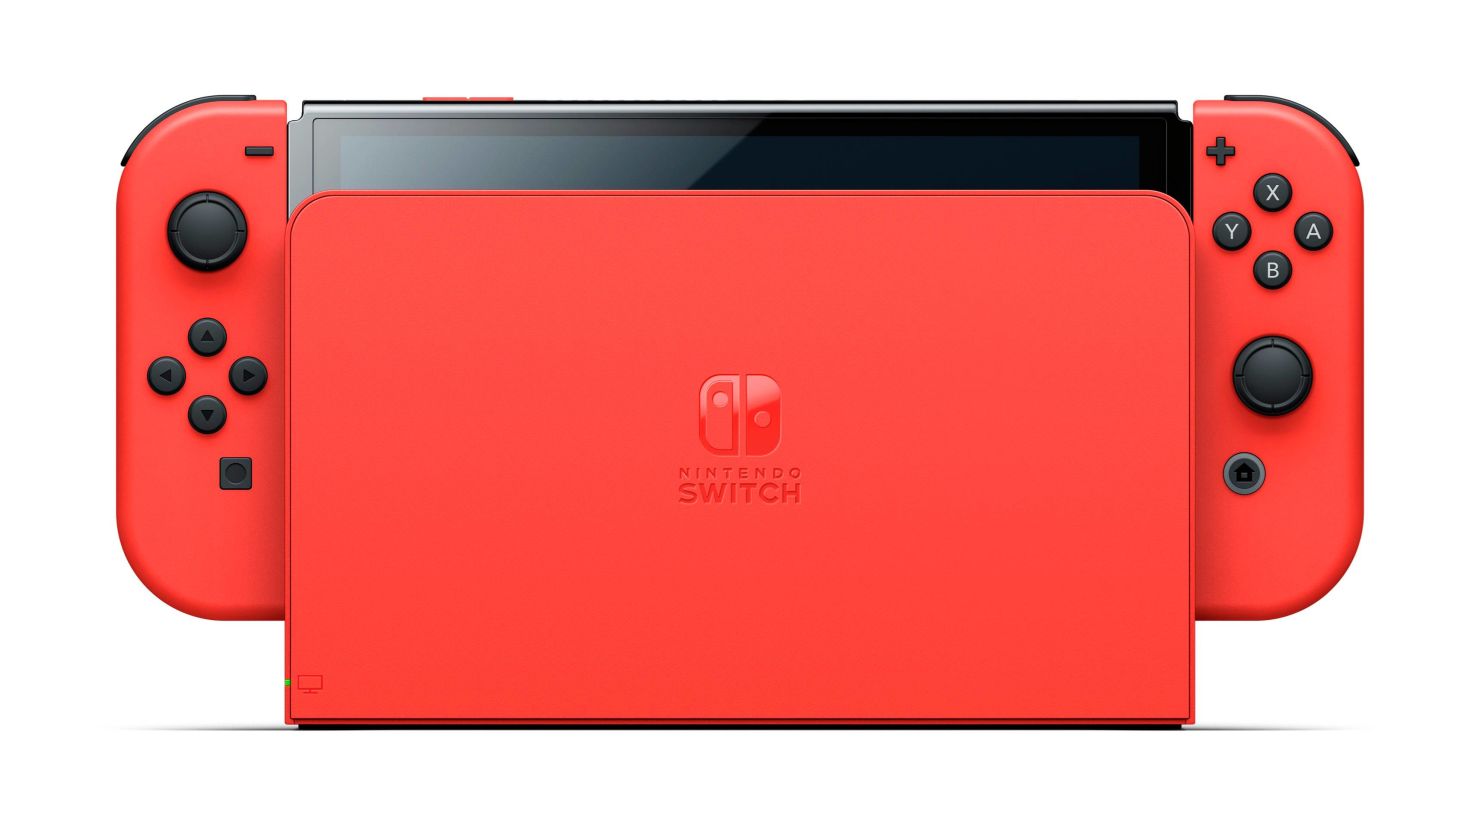 Nintendo Switch - Achat Console Nintendo Switch